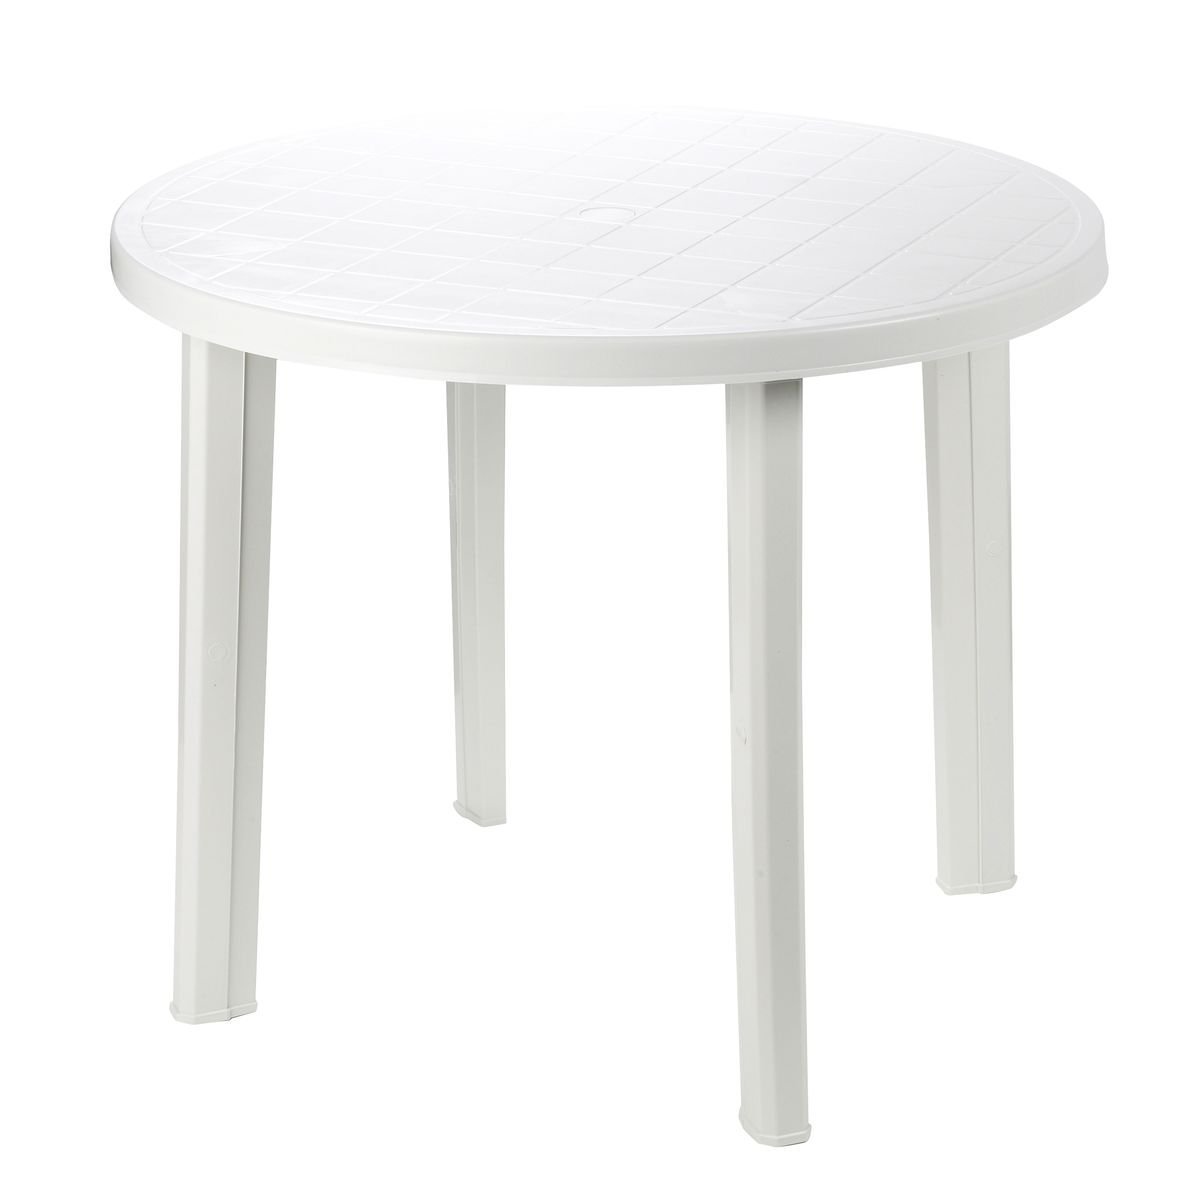 Table résine ronde Tondo Ø90x72cm blanc - PROGARDEN